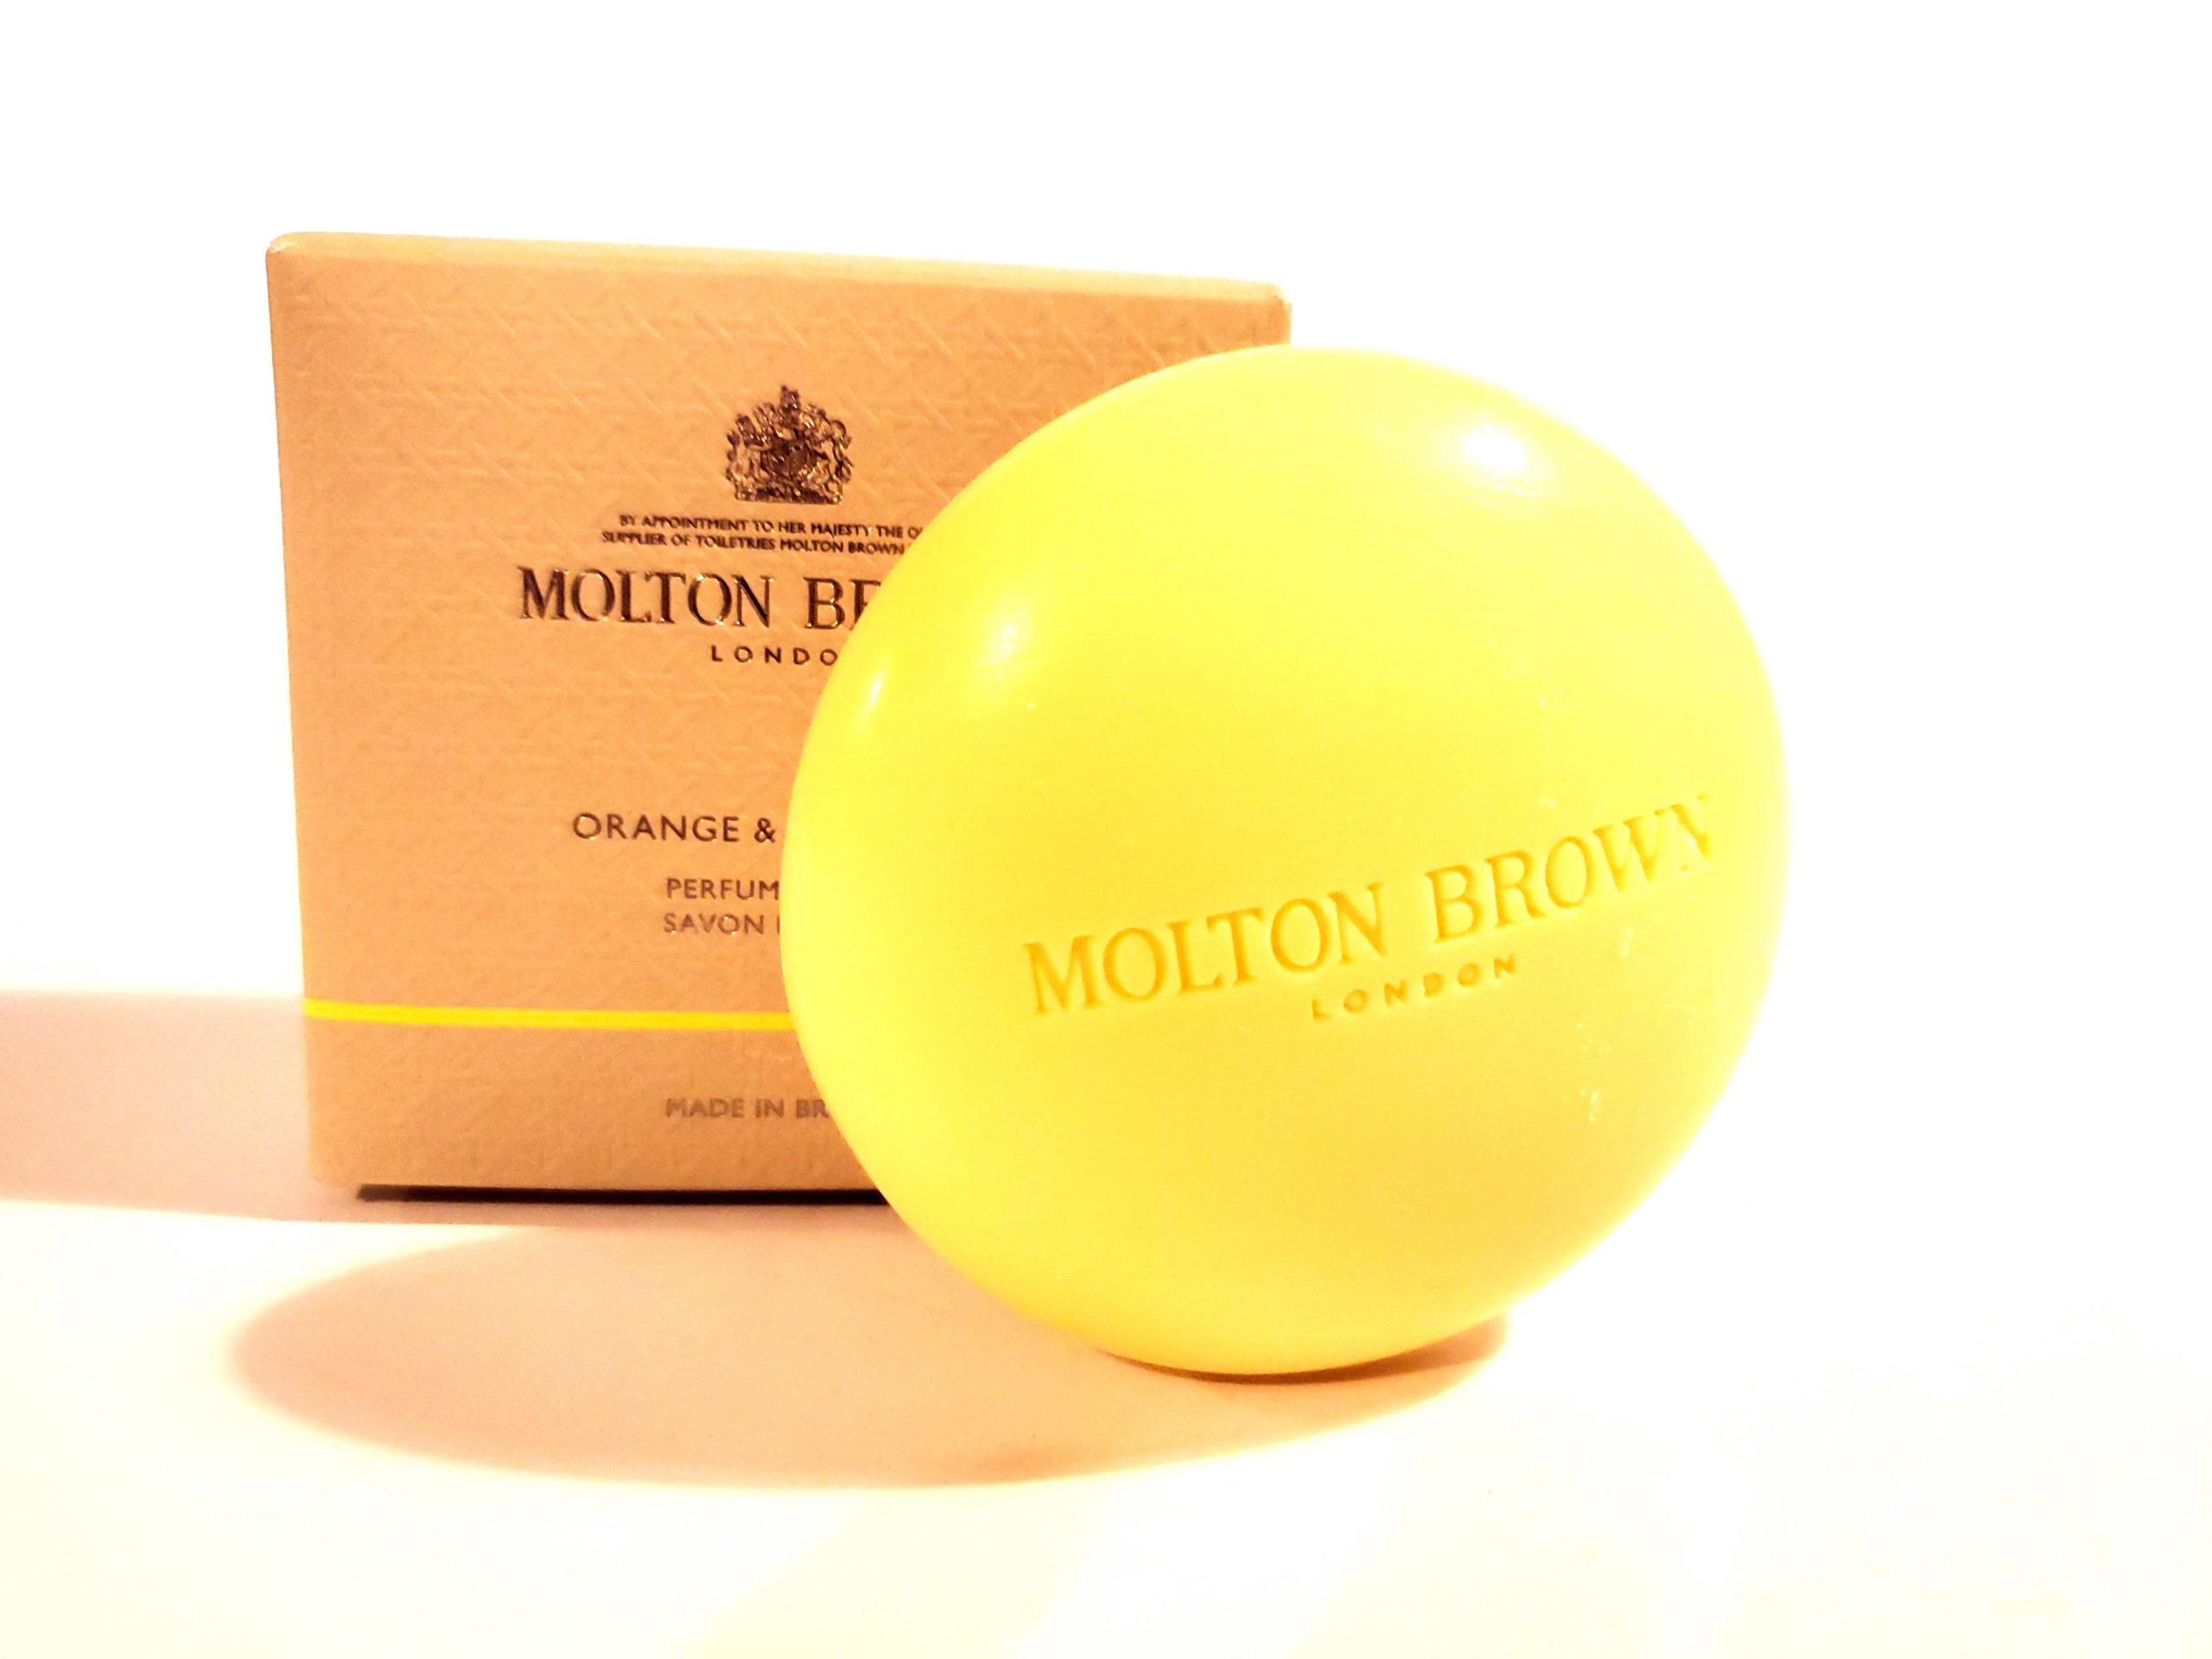 Molton Brown Orange & Bergamot Perfumed Bar of Soap.